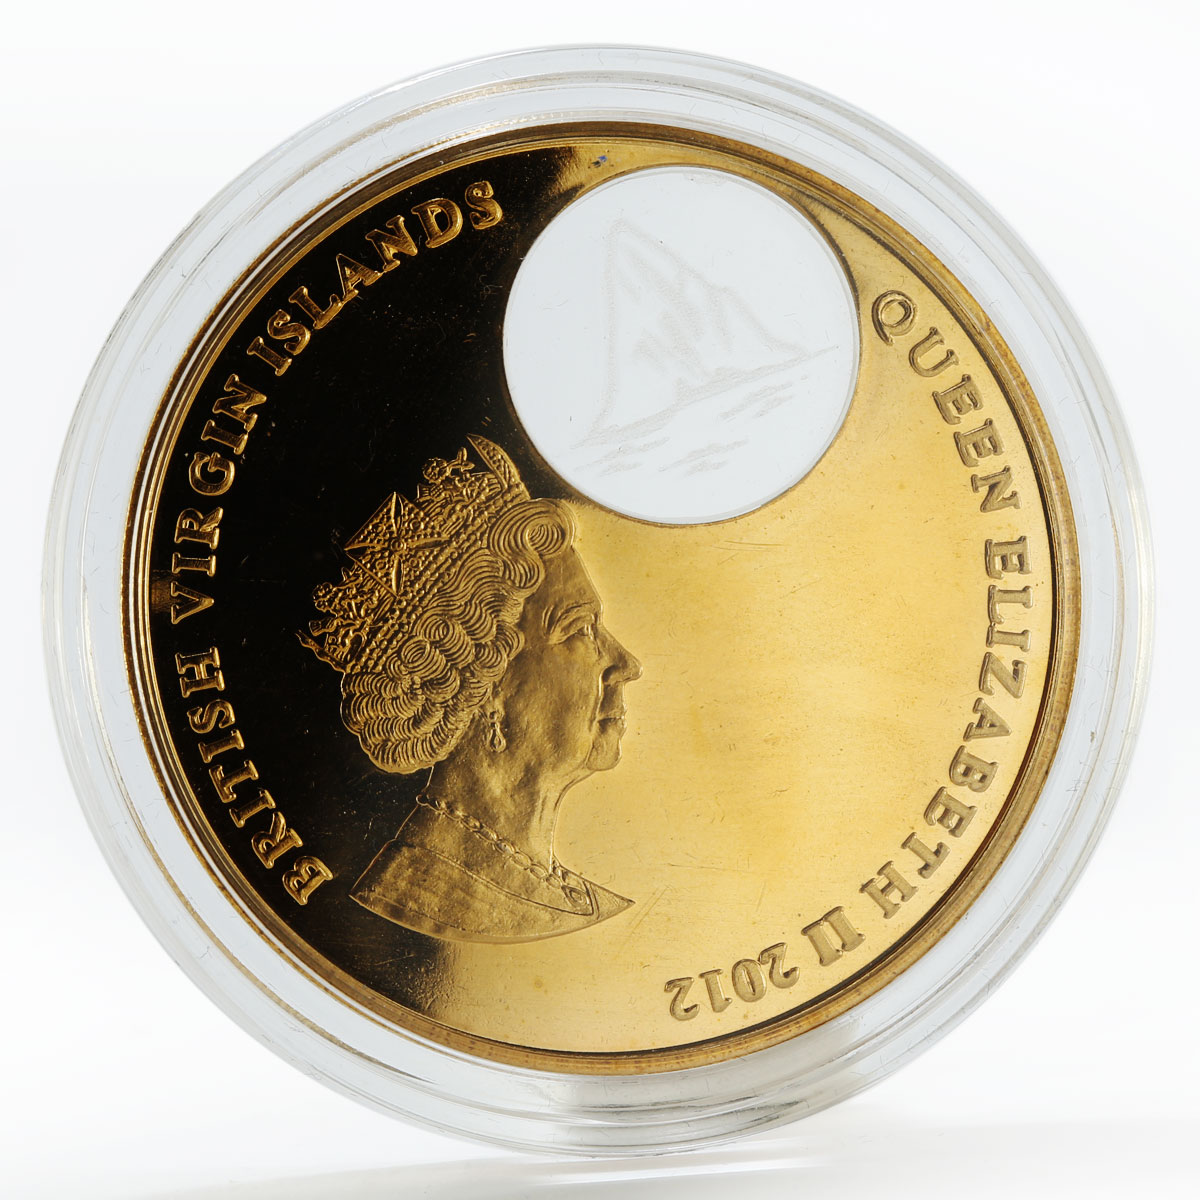 British Virgin Islands 2$ R.M.S. Titanic II proof colored bronze coin 2012